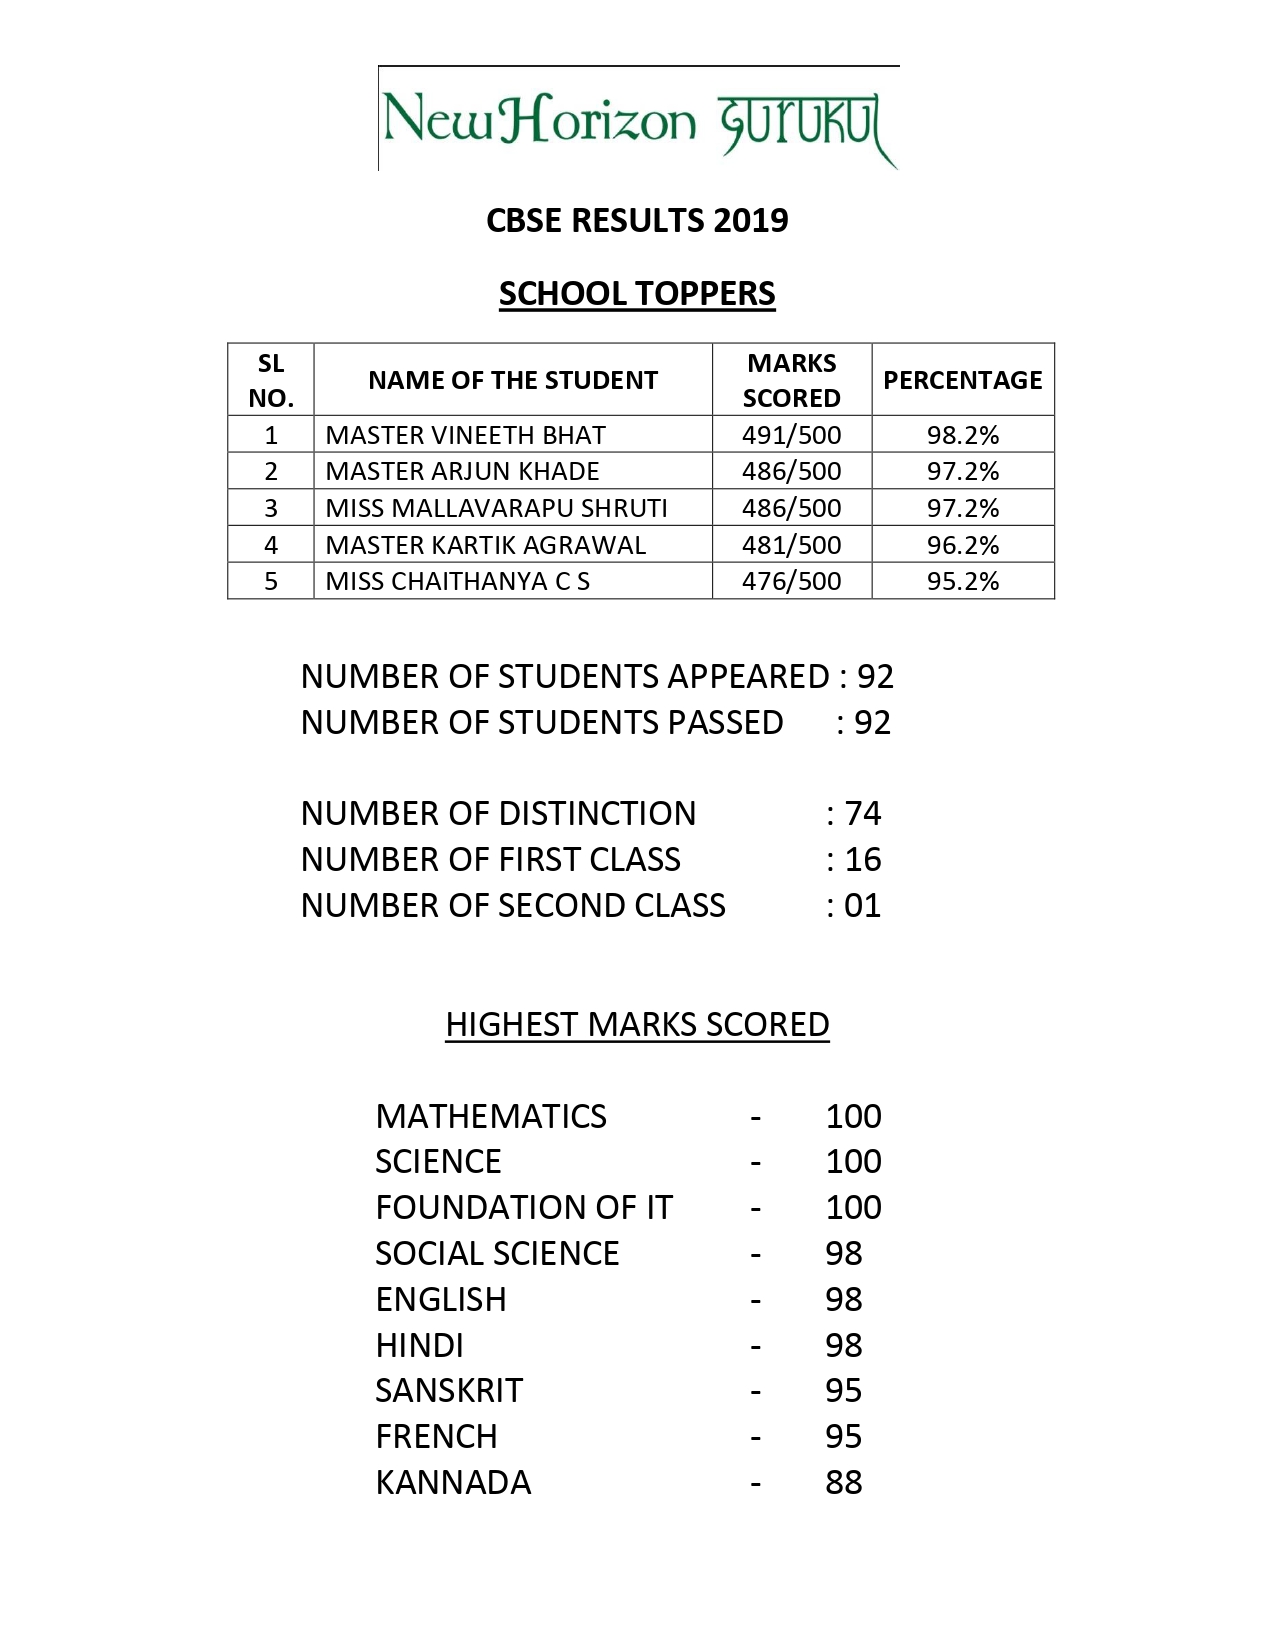 CBSE-Results-2020-NHG